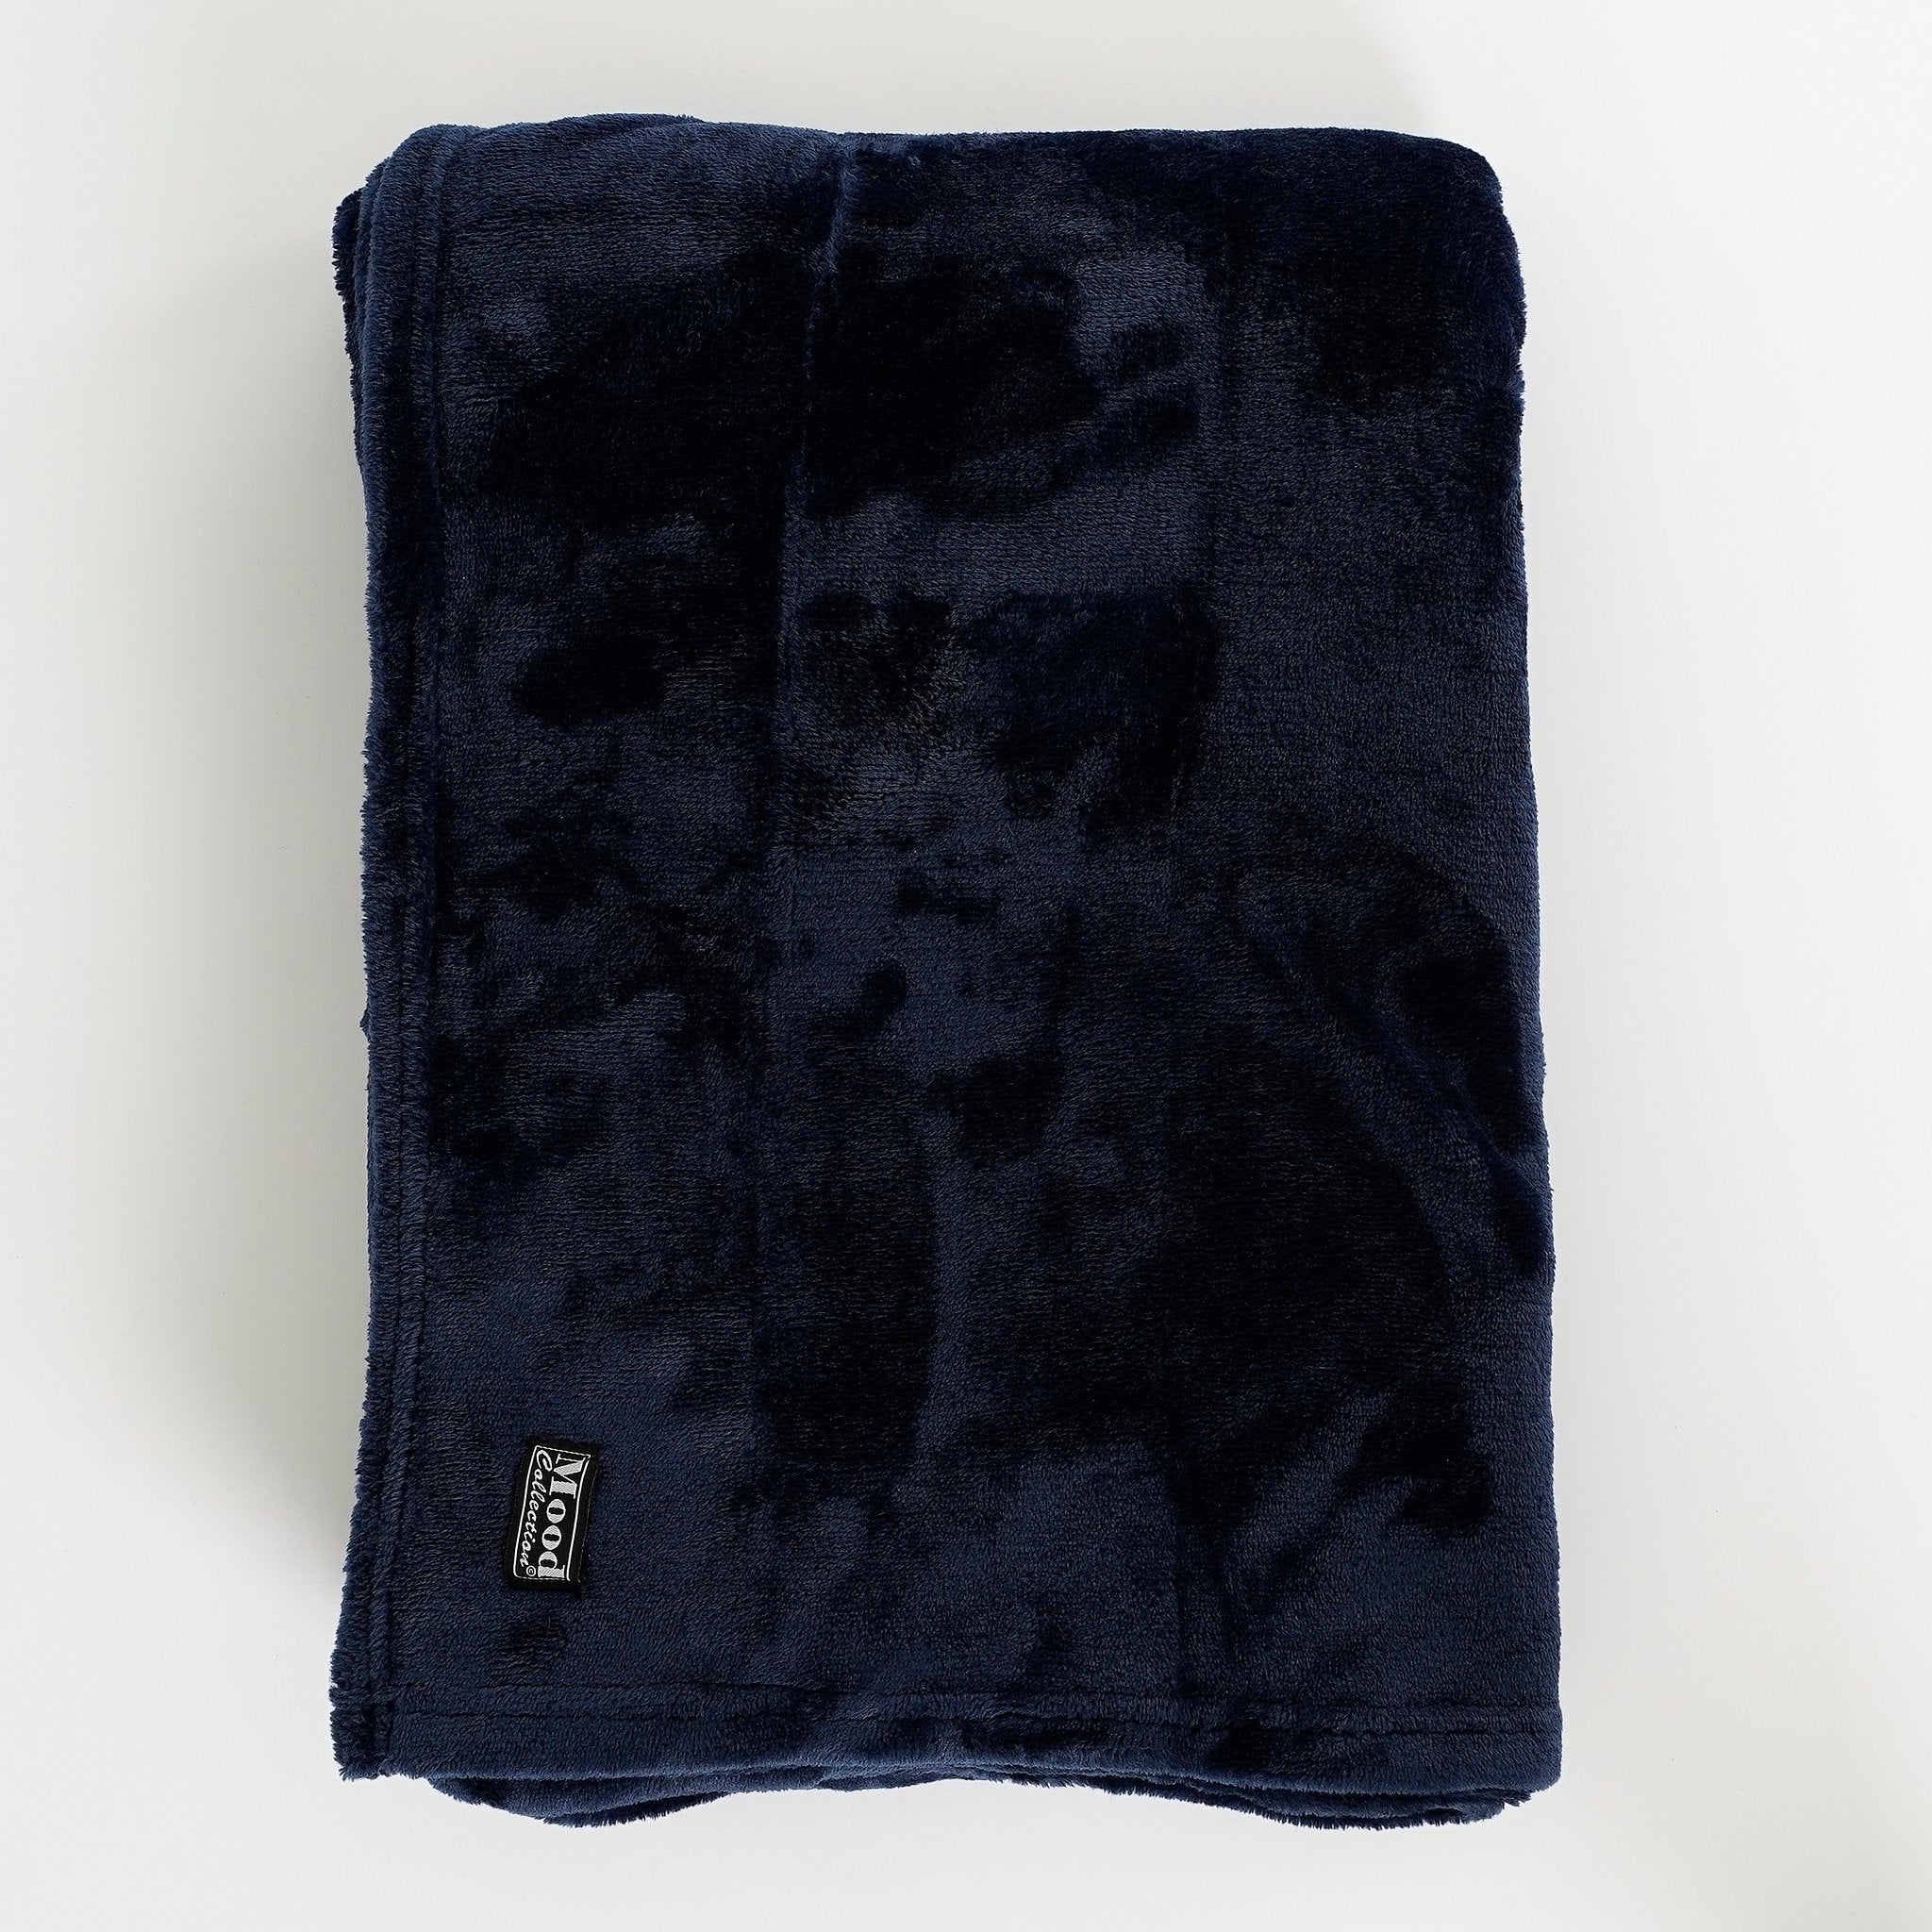 In The Mood Collection Famke Fleece Plaid - L180 x W130 cm - Dark blue